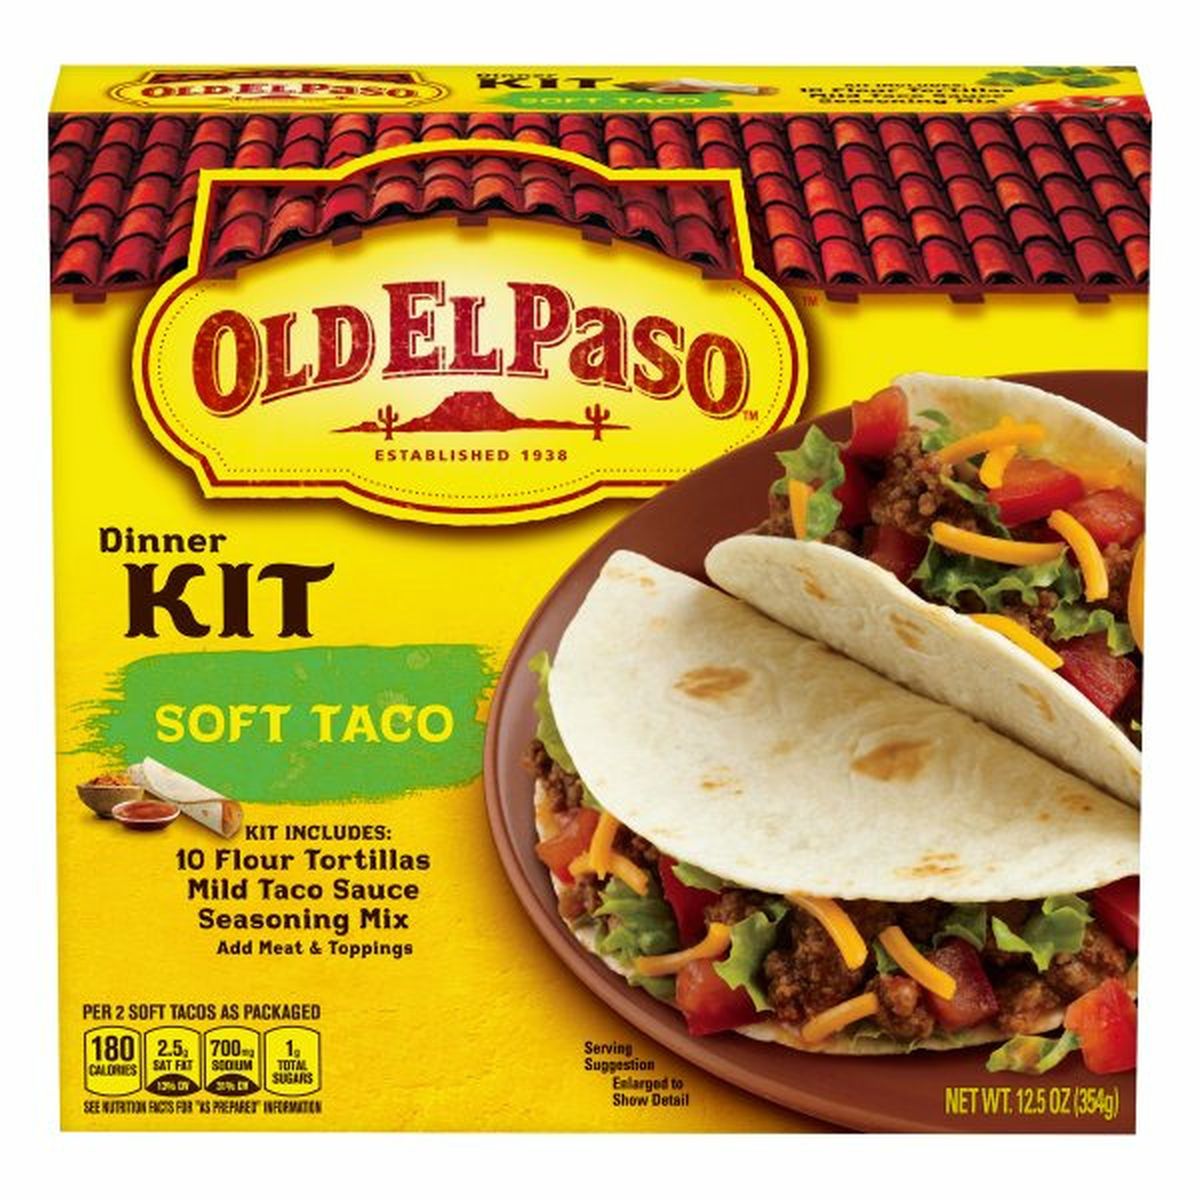 Calories in Old El Paso Dinner Kit, Soft Taco